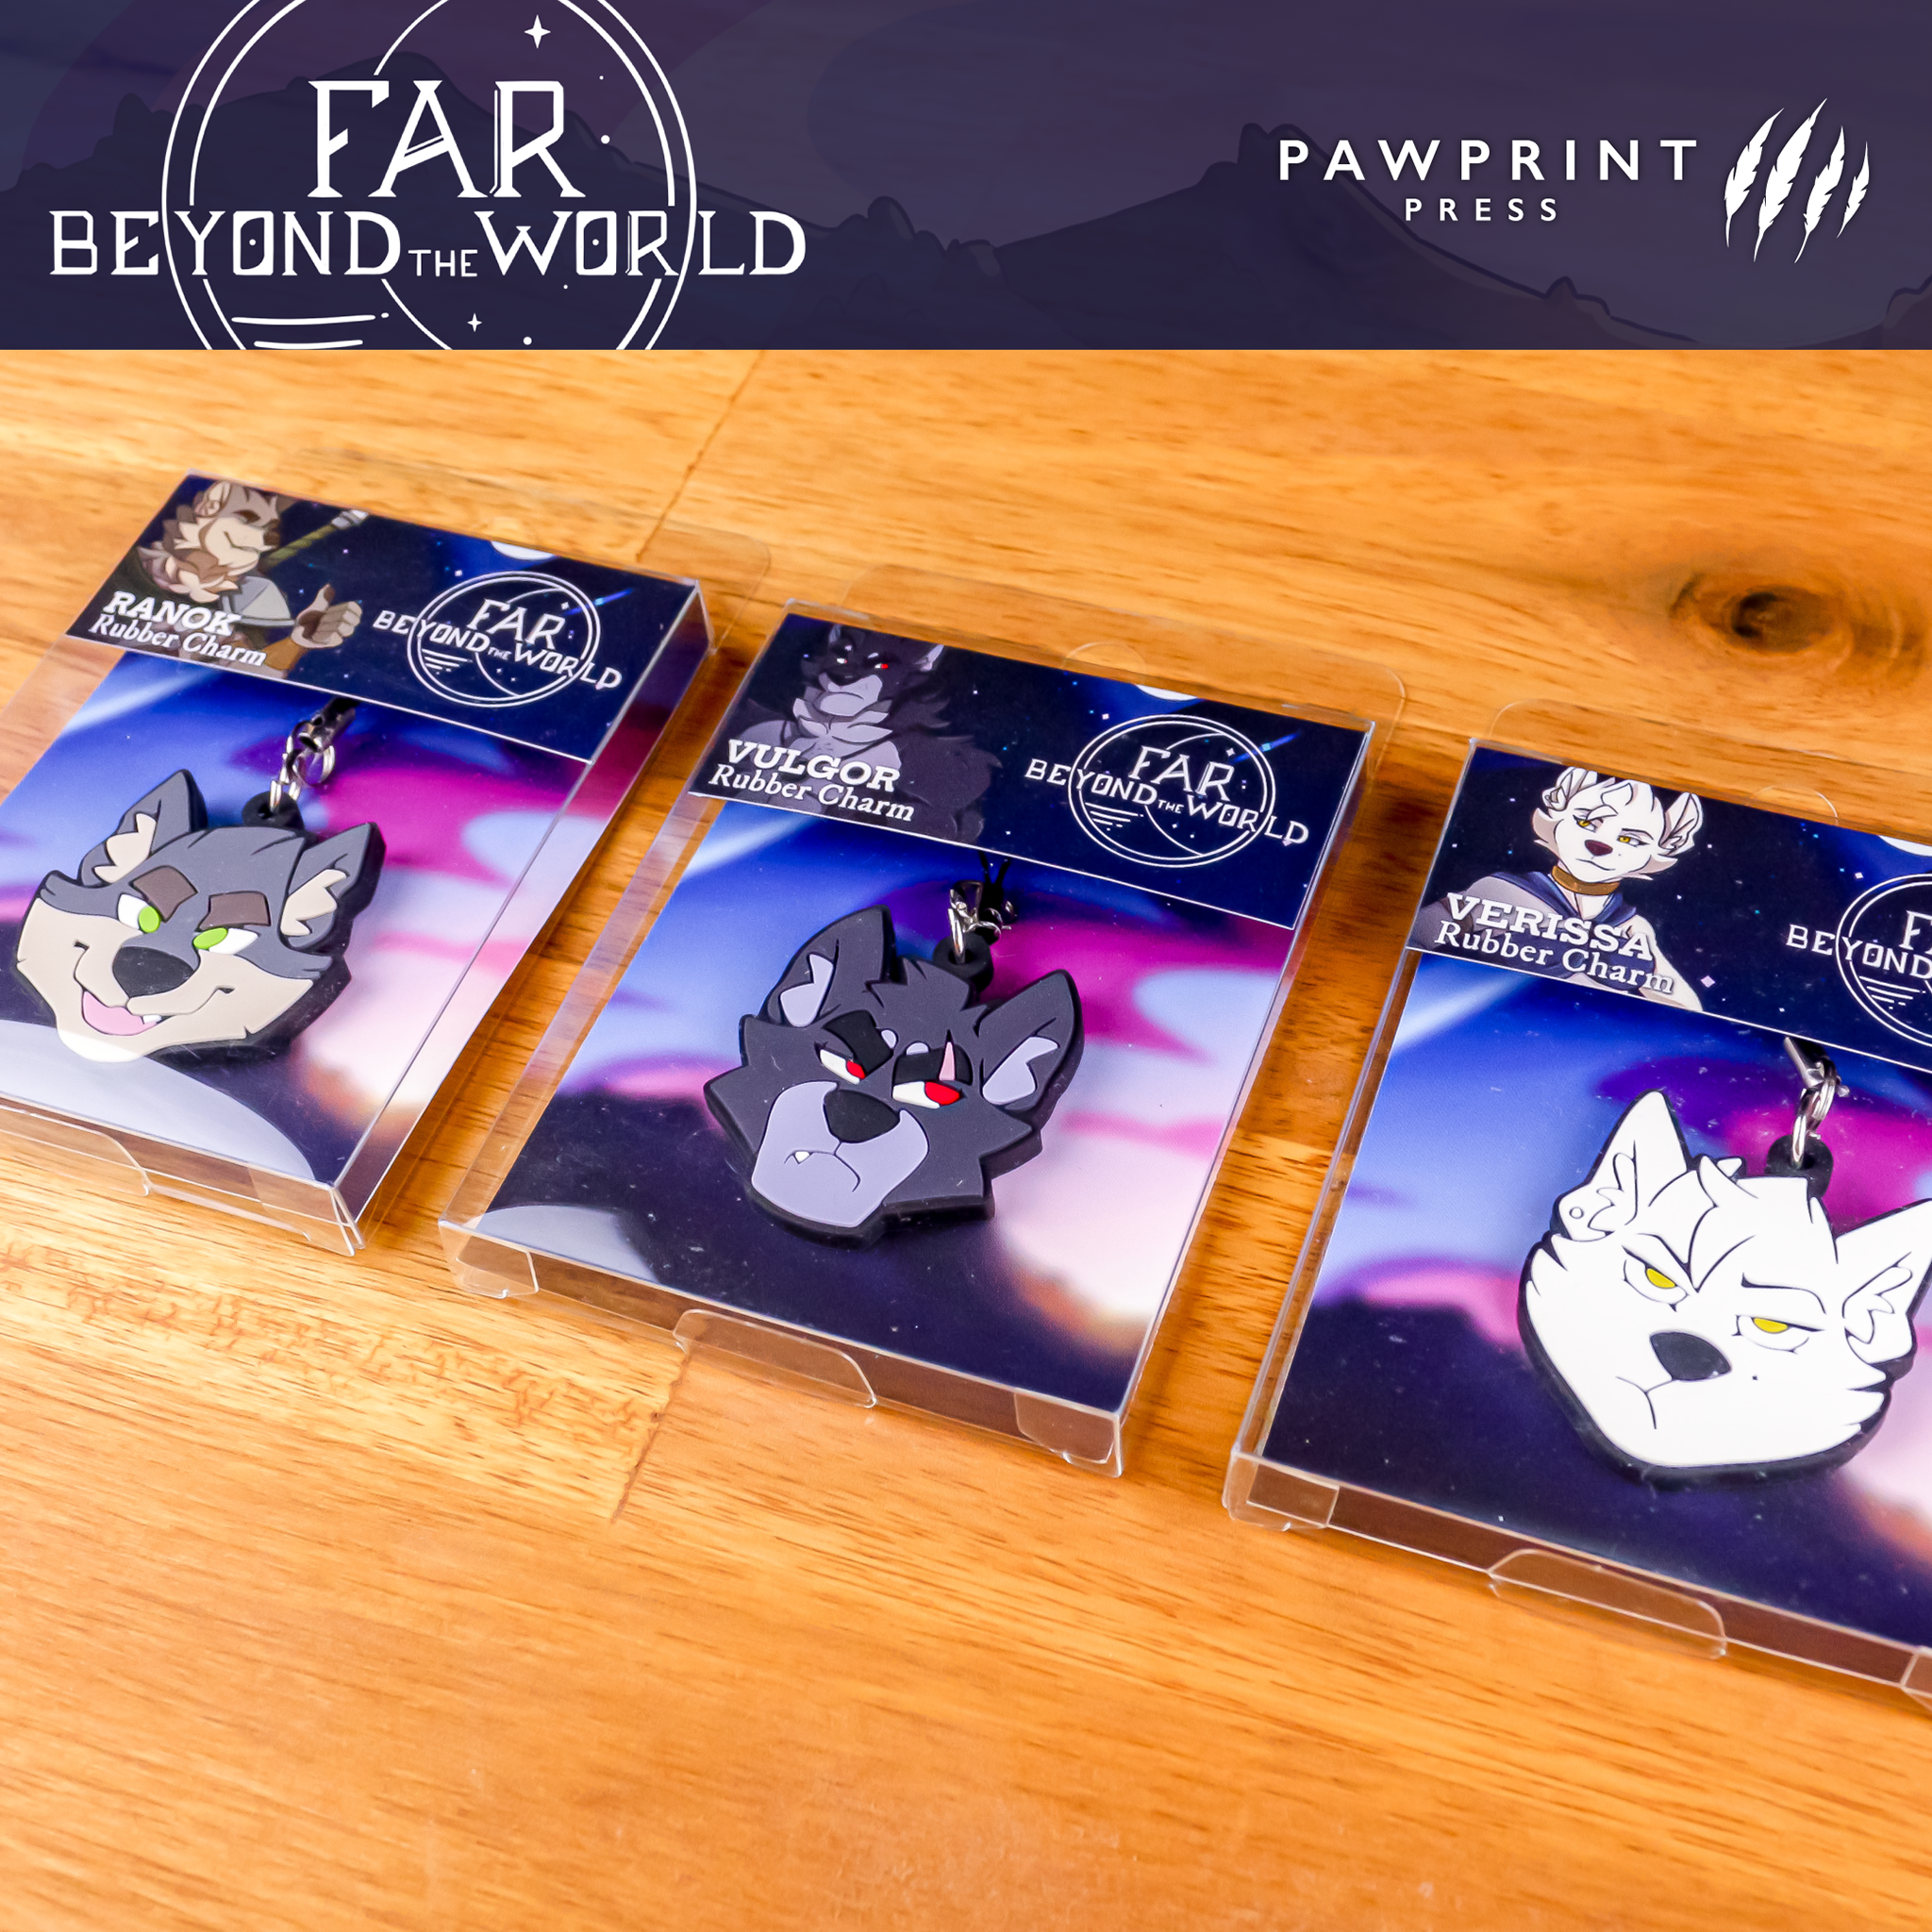 Far Beyond The World Rubber Charm Set Pawprint Press Official Store